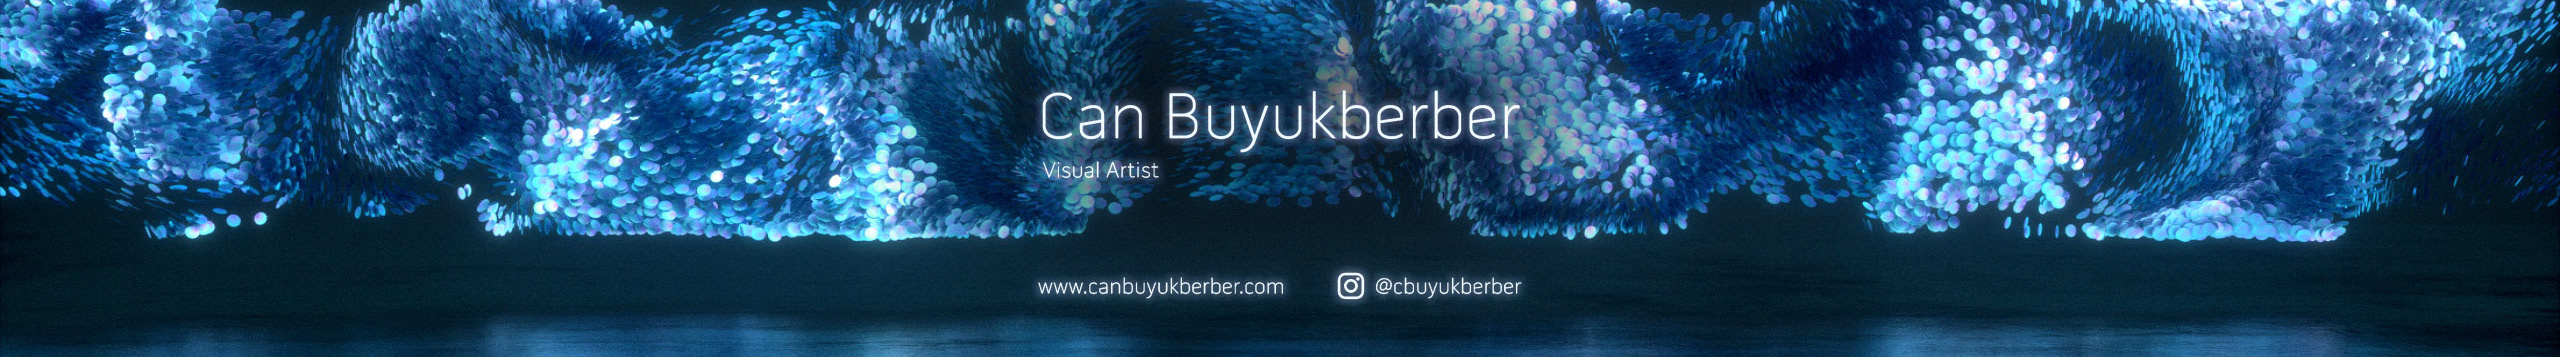 Can Buyukberber's profile banner